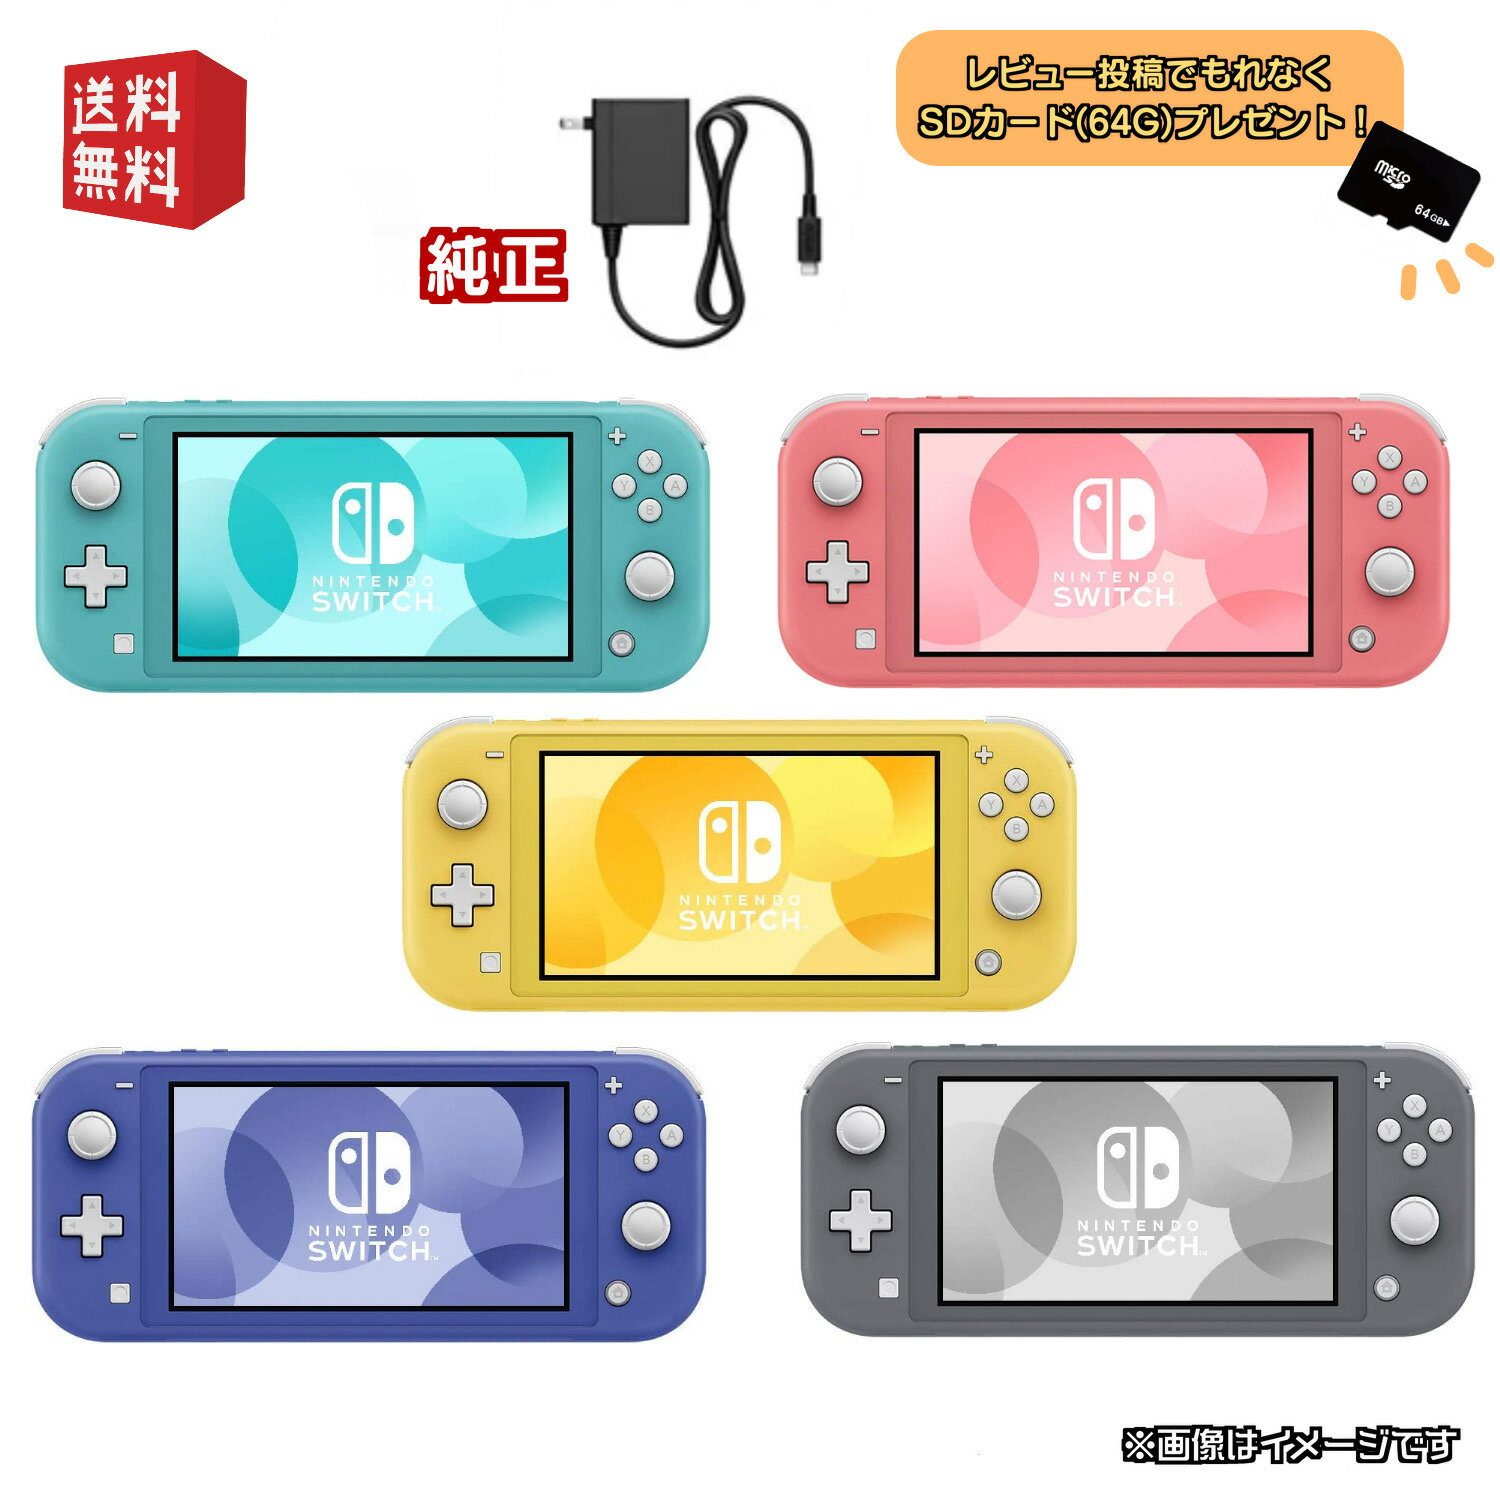 Nintendo Switch Lite 本体【 純正ACアダプタ 】選べるカラー5色 [ターコイズ / ピンク / イエロー / グレー / ブル…